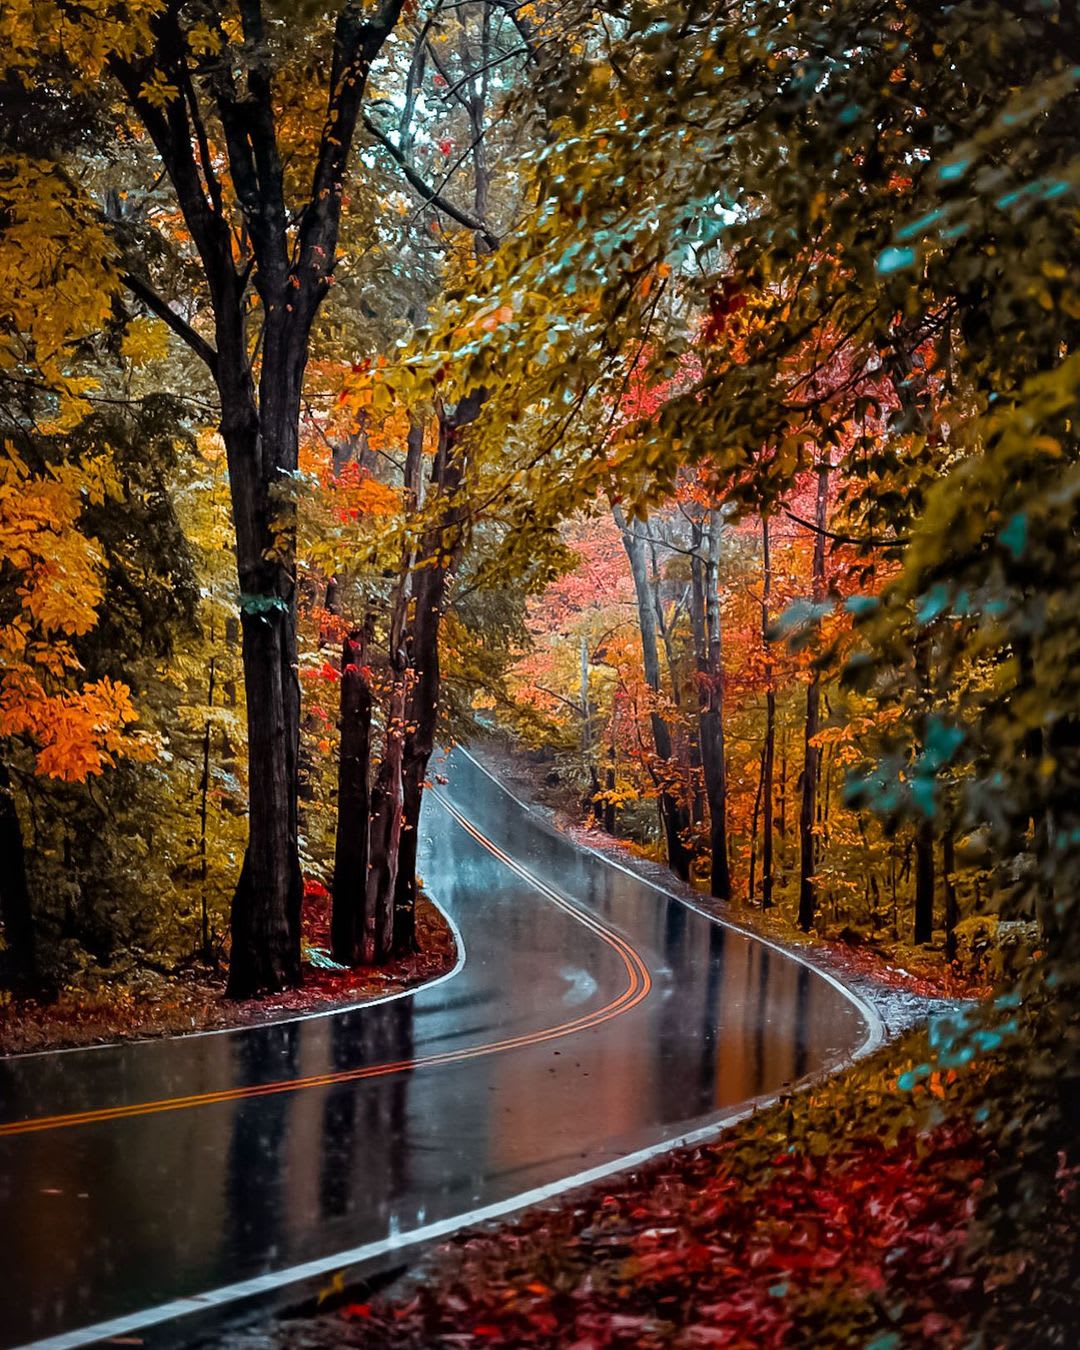 Rain soaked road through the fall foliage, Woburn, Massachusetts.